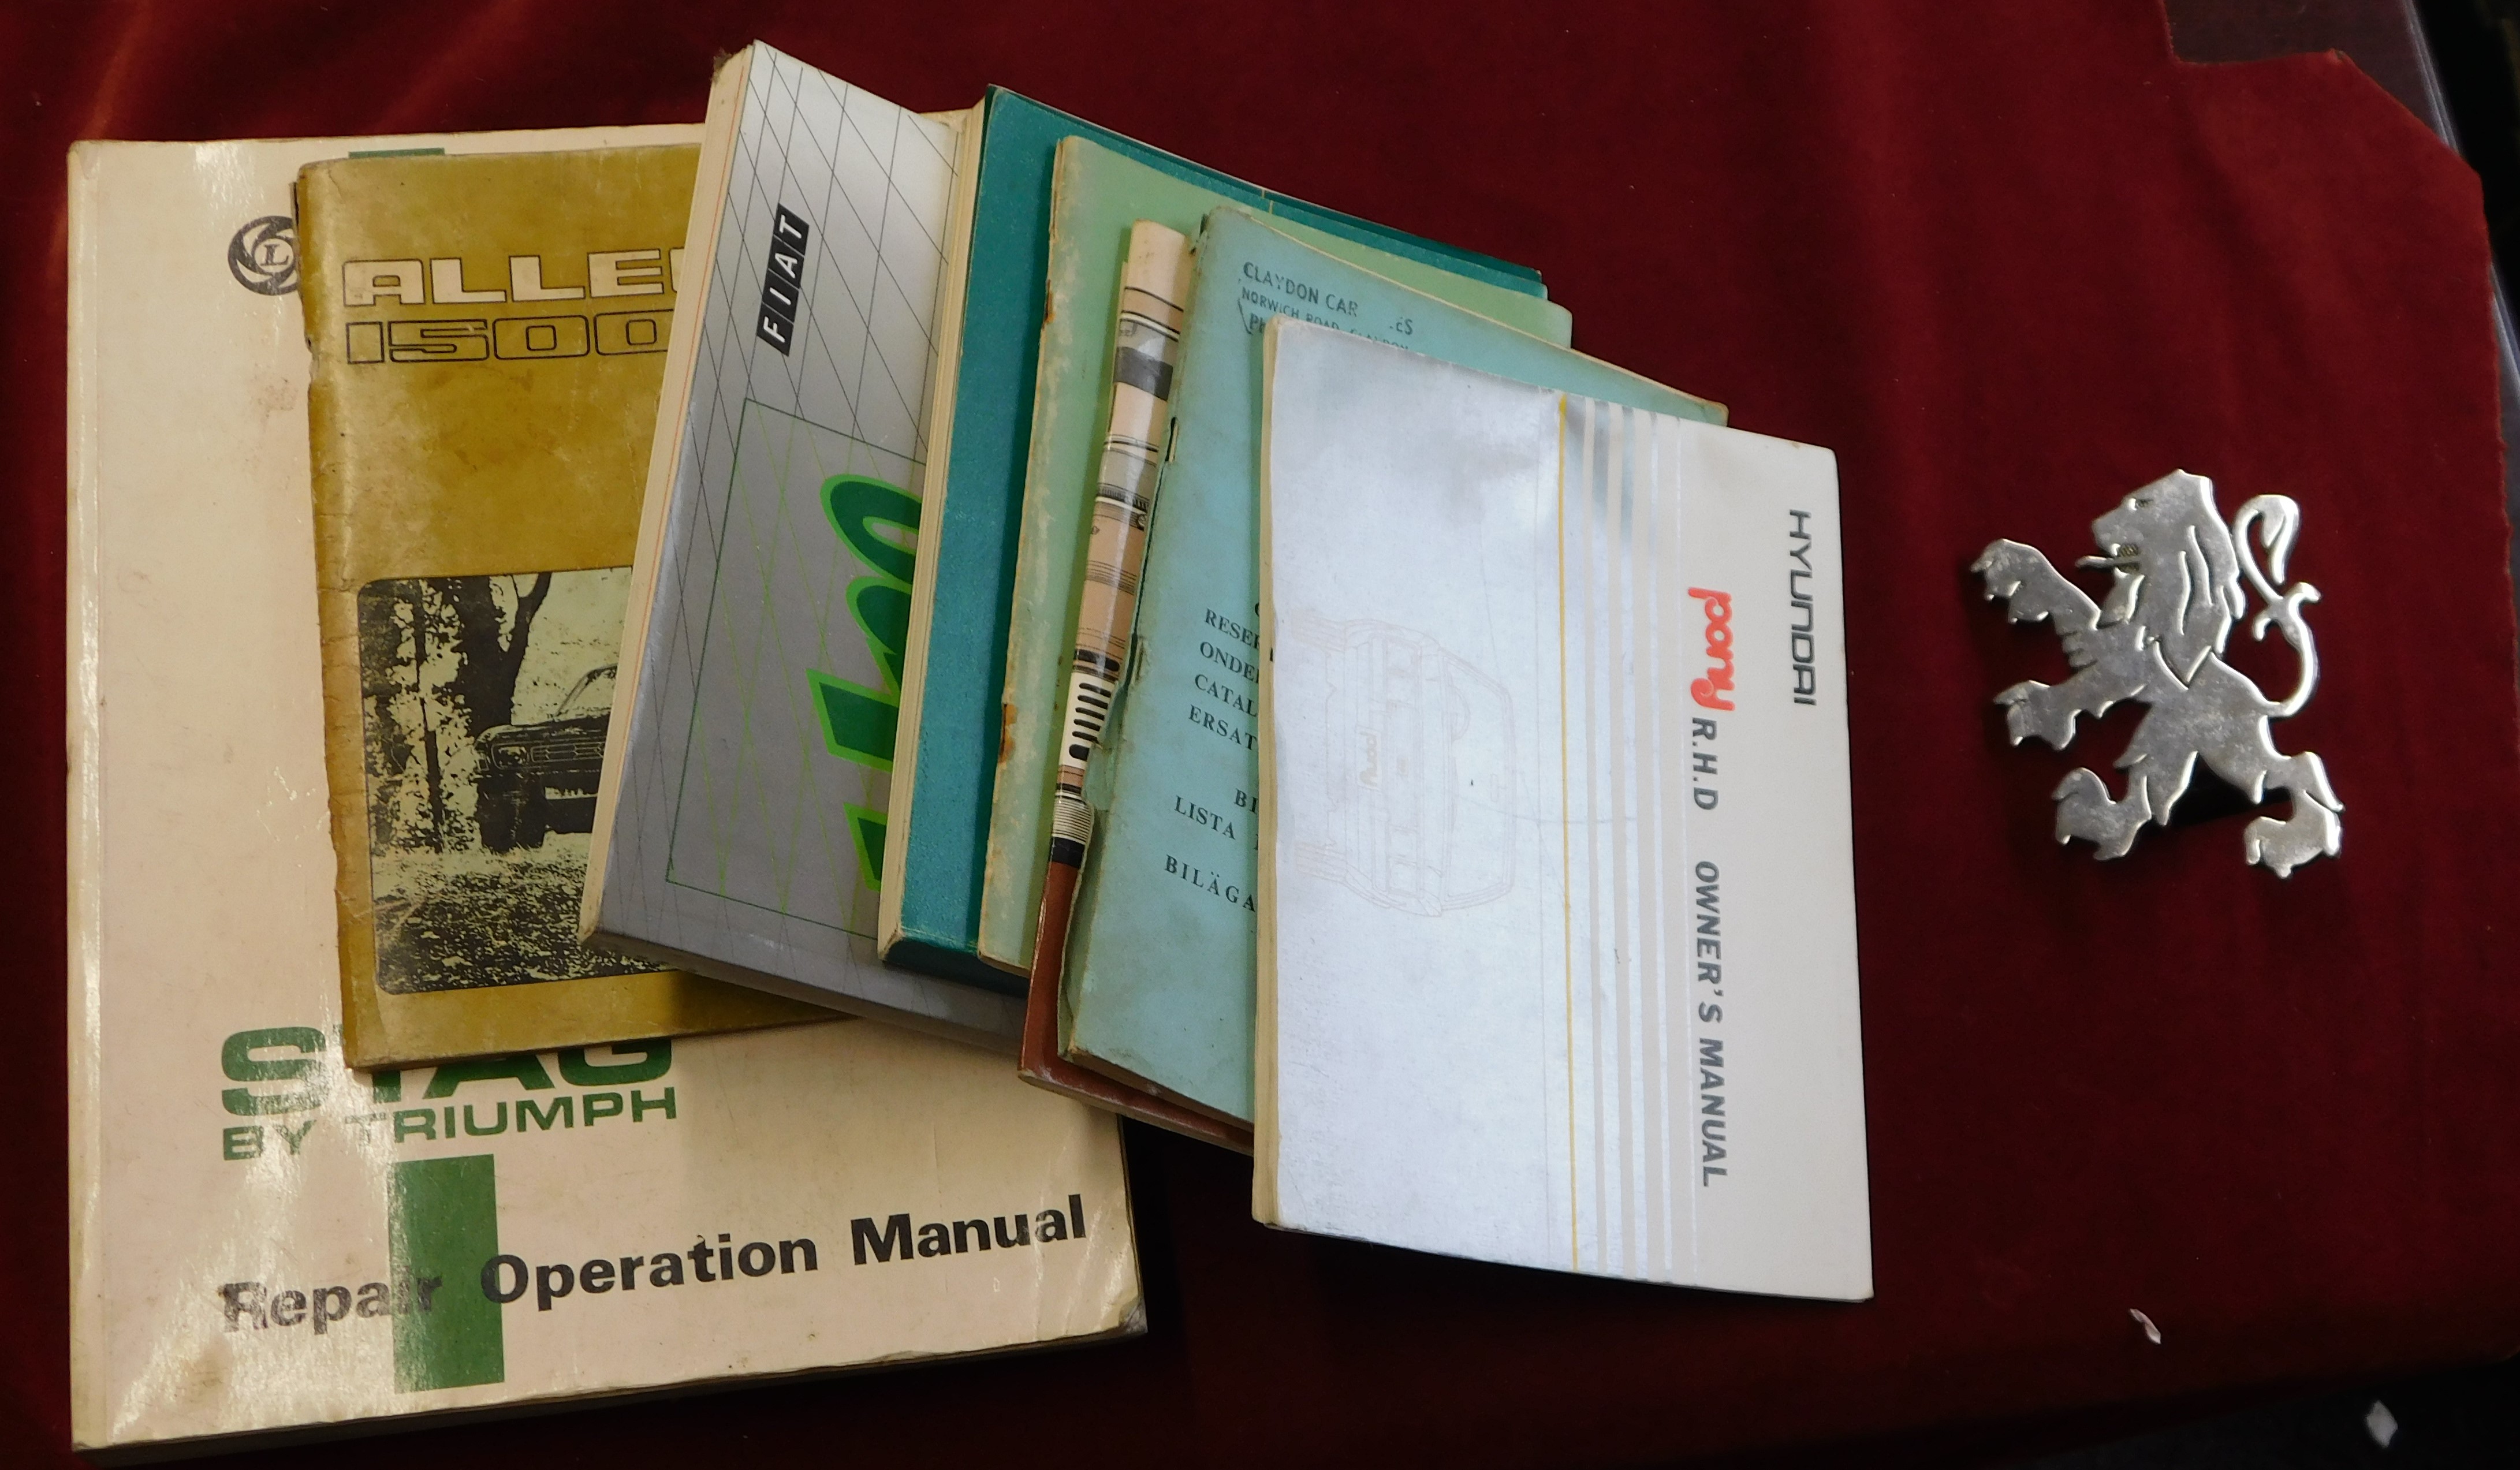 Car Manuals - A collection of manuals including Austin A40, Allegro 1500, Triumph Stag, Fiat Uno,